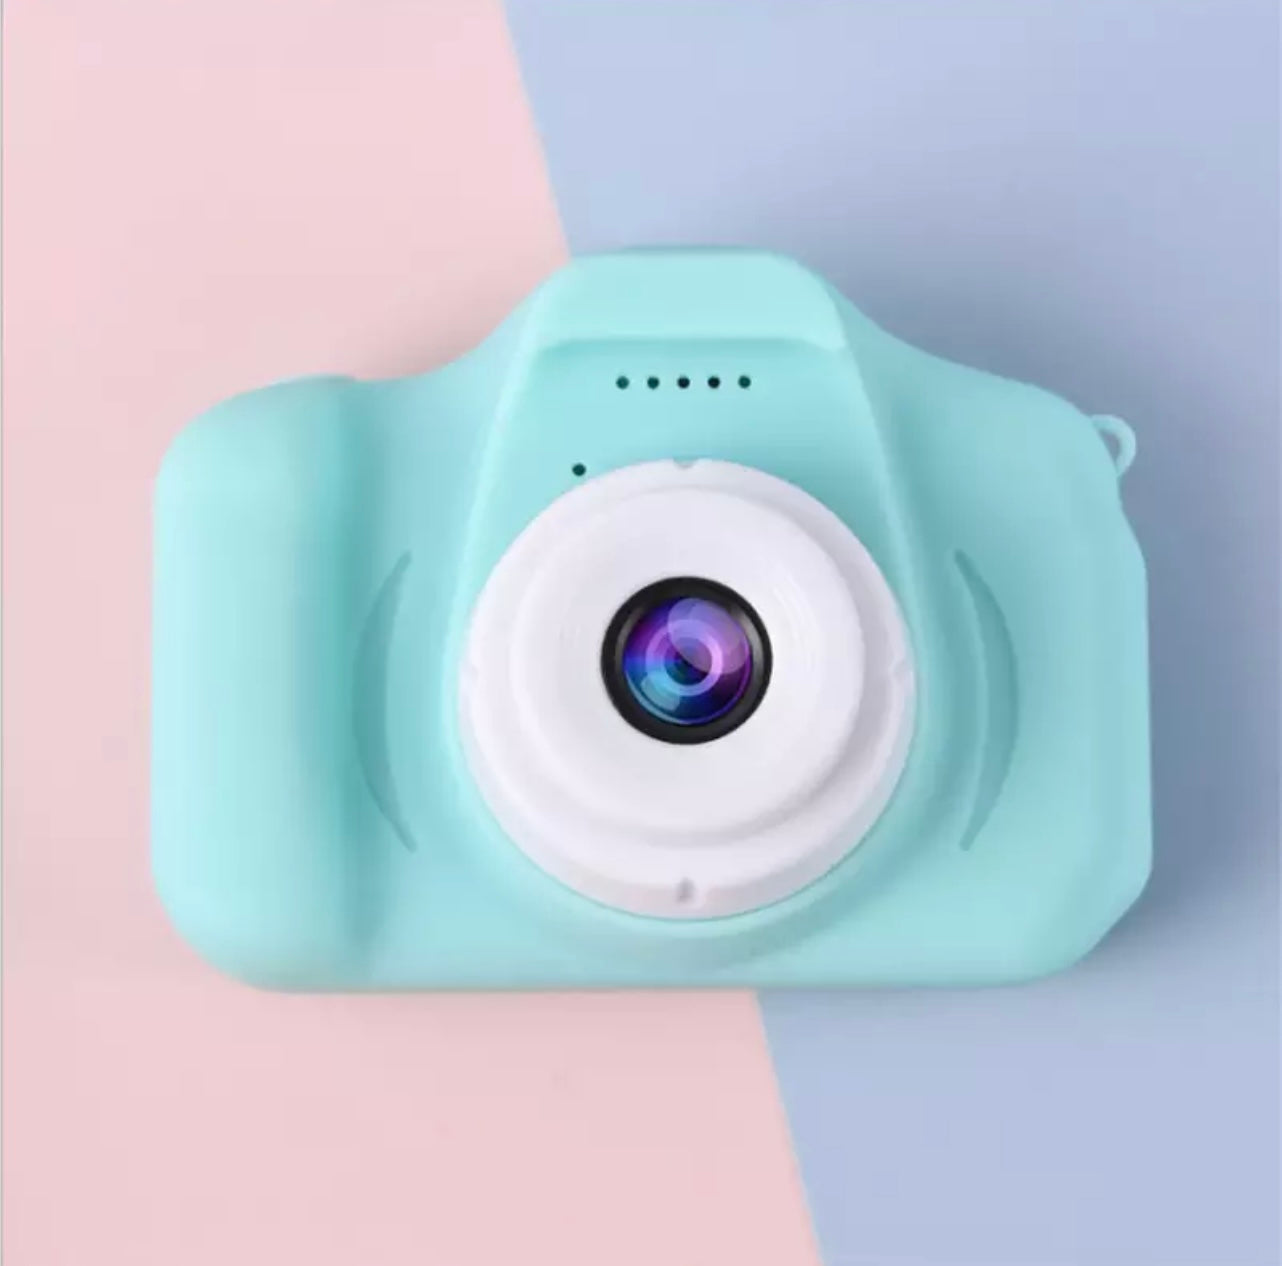 The Vintage Mini Camera